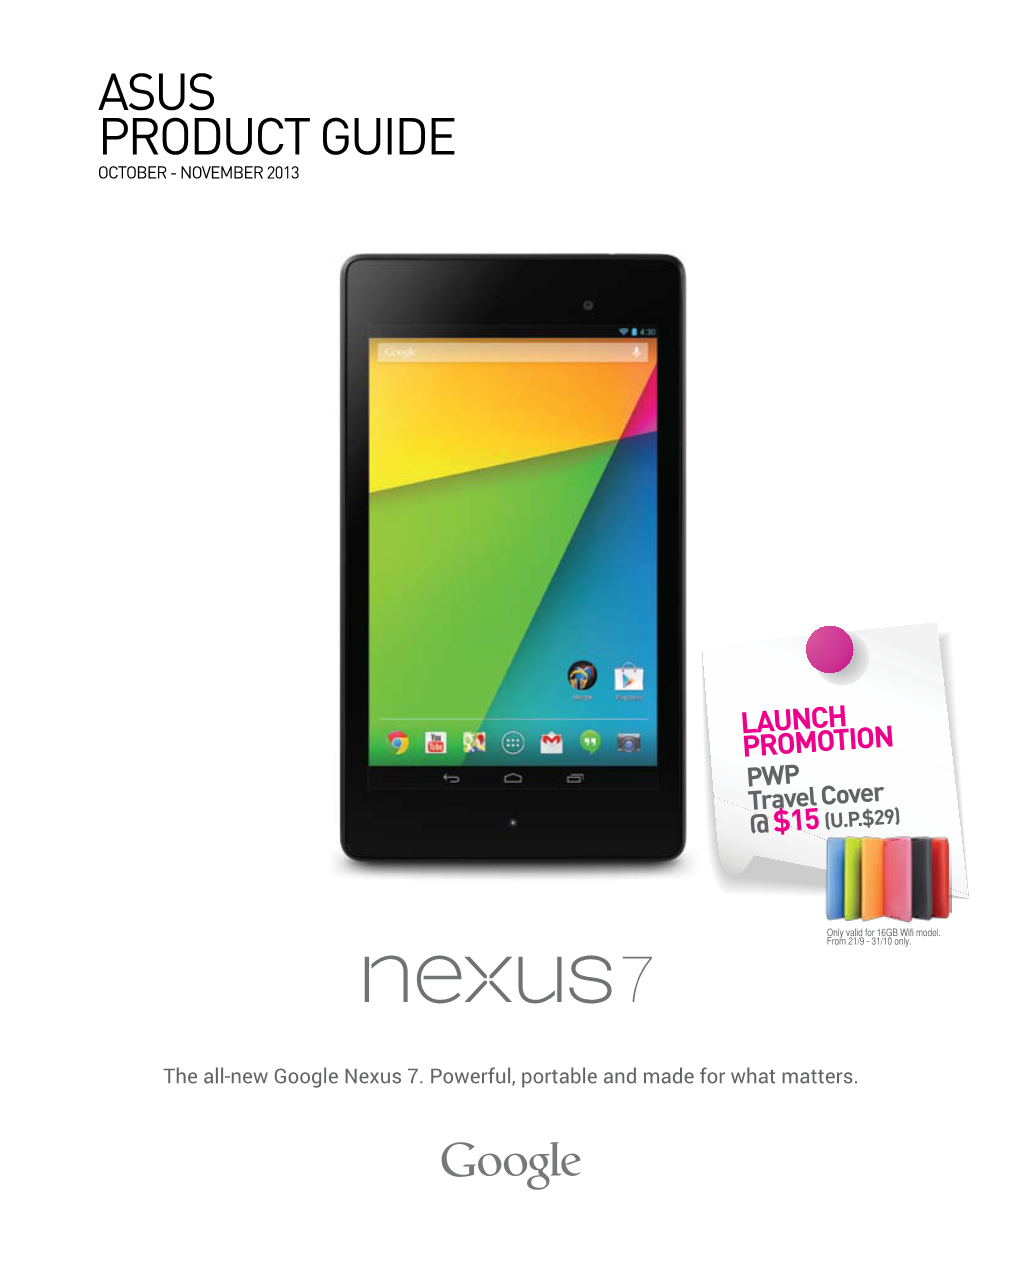 Asus Product Guide October - November 2013